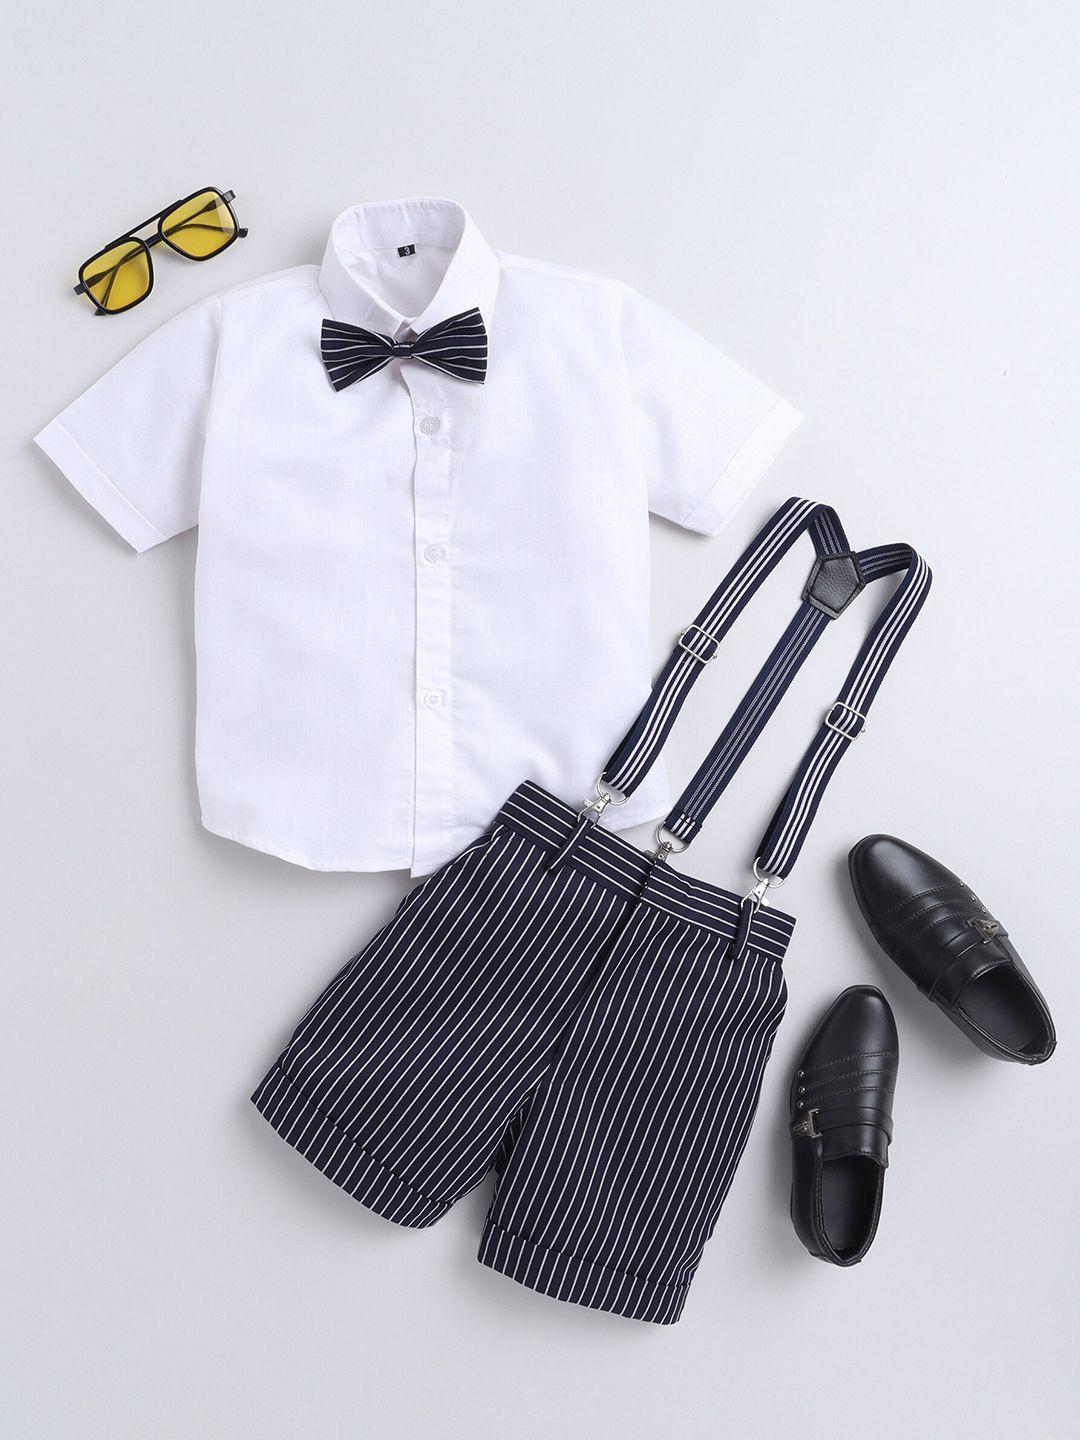 jeetethnics boys navy blue & white shirt & shorts with suspenders